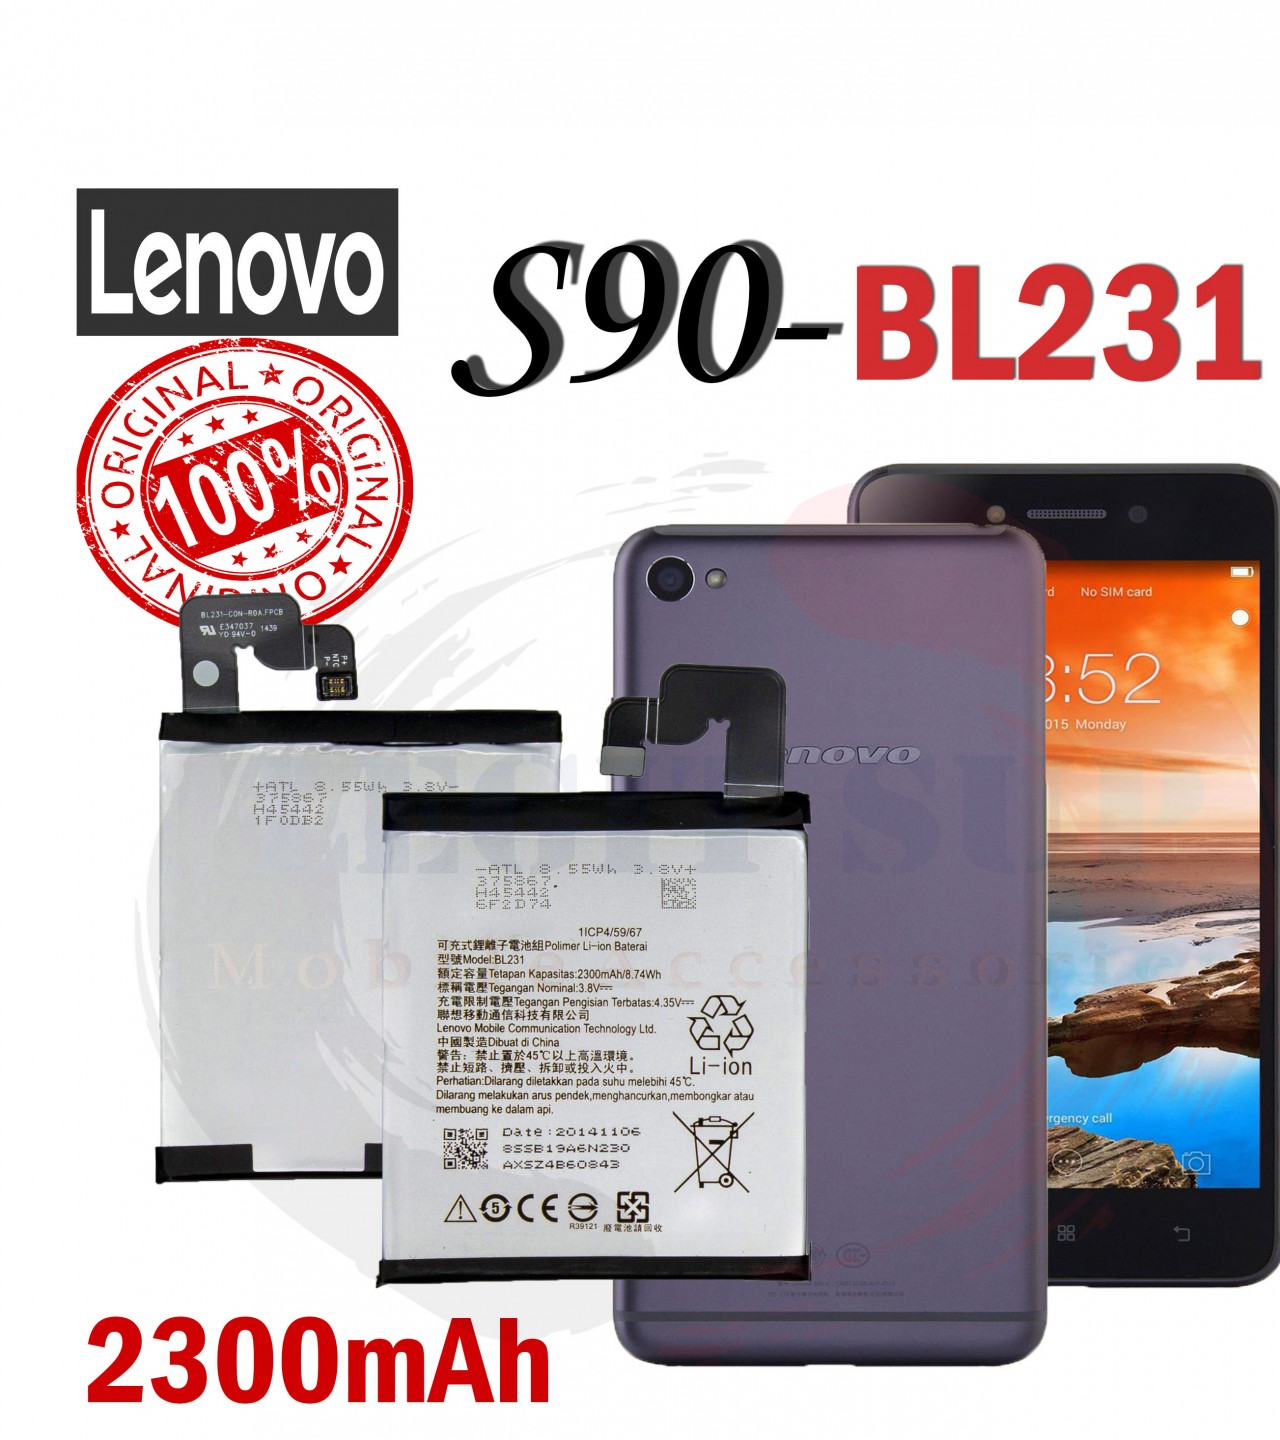 Lenovo BL231 battery For Lenovo Vibe X2 / S90 with 2300 mAh Capacity- Black